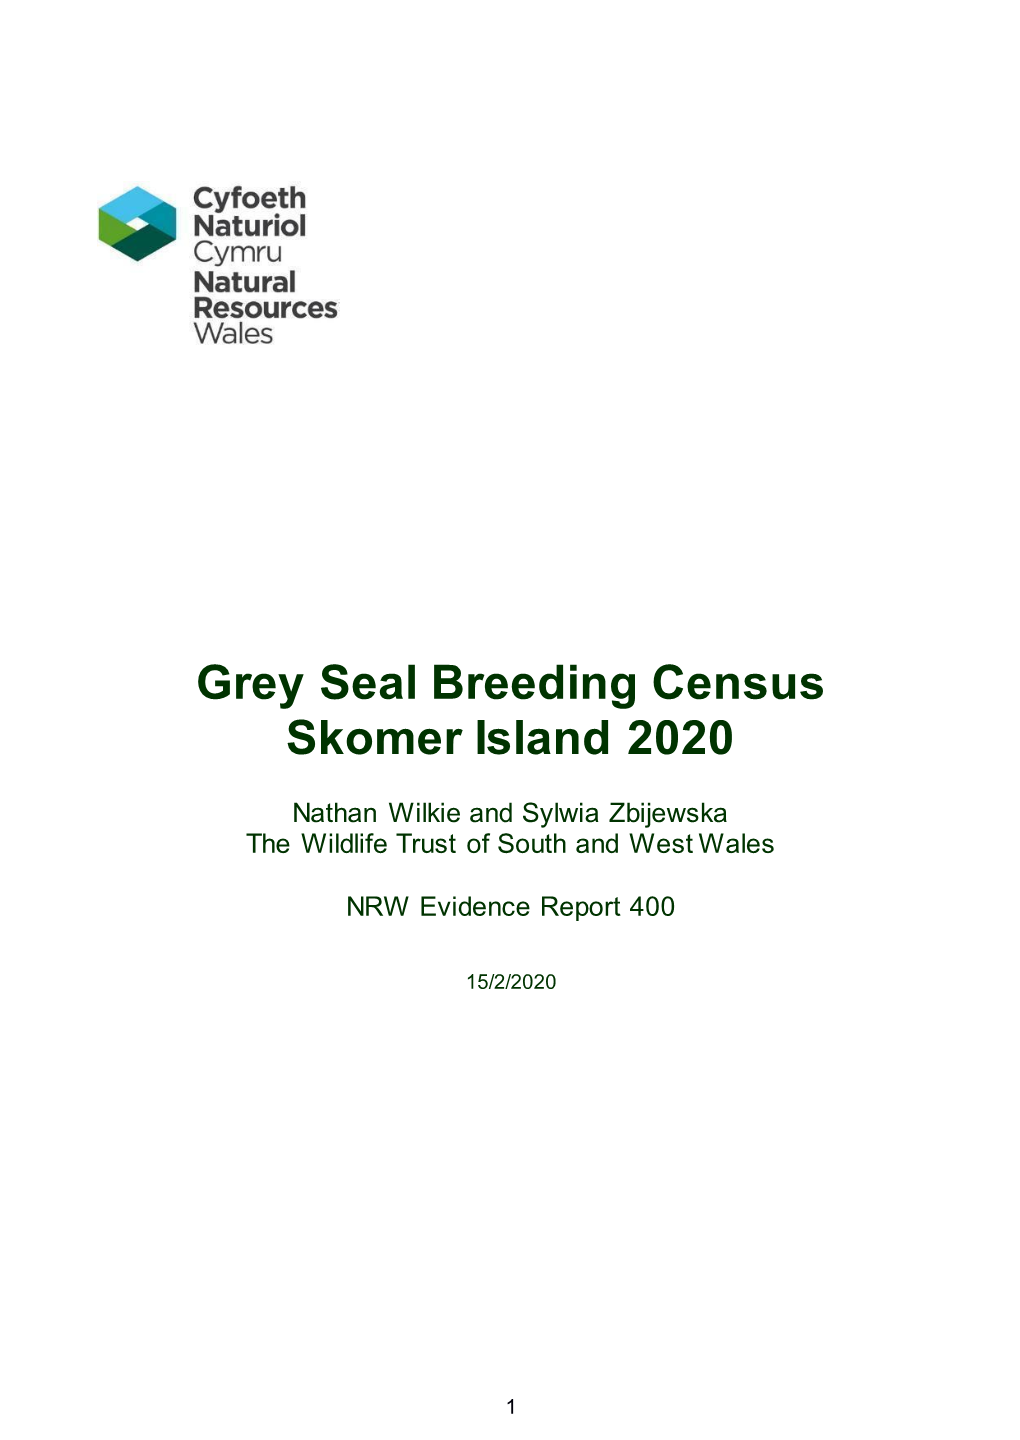 Grey Seal Breeding Census Skomer Island 2020